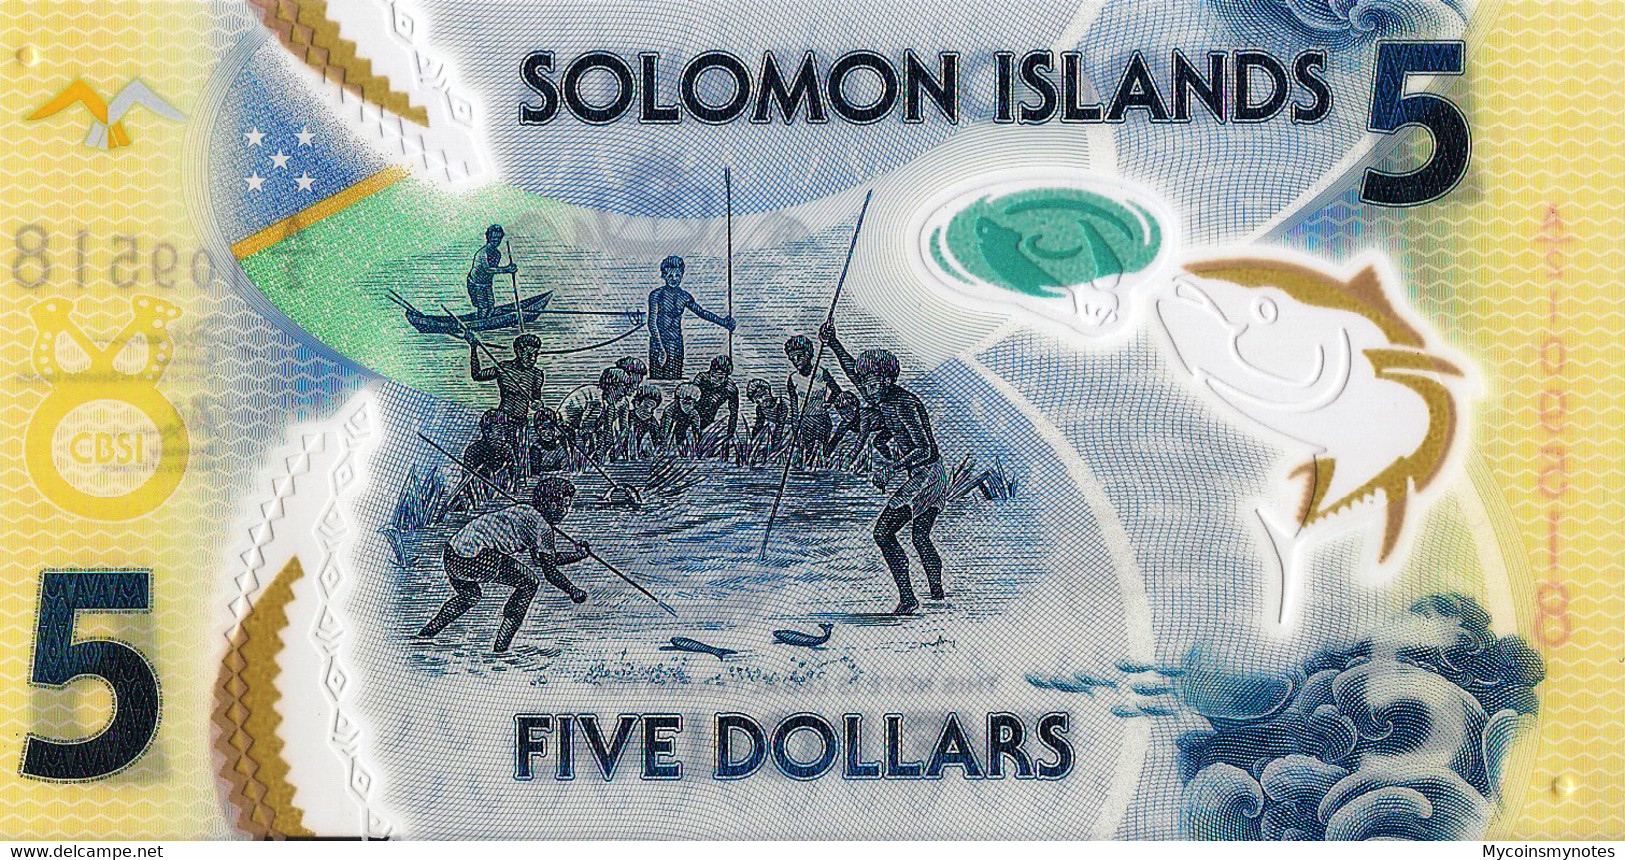 SOLOMON ISLAND, 5 DOLLAR, 2019, P-NEW, Polymer, UNC - Salomonseilanden